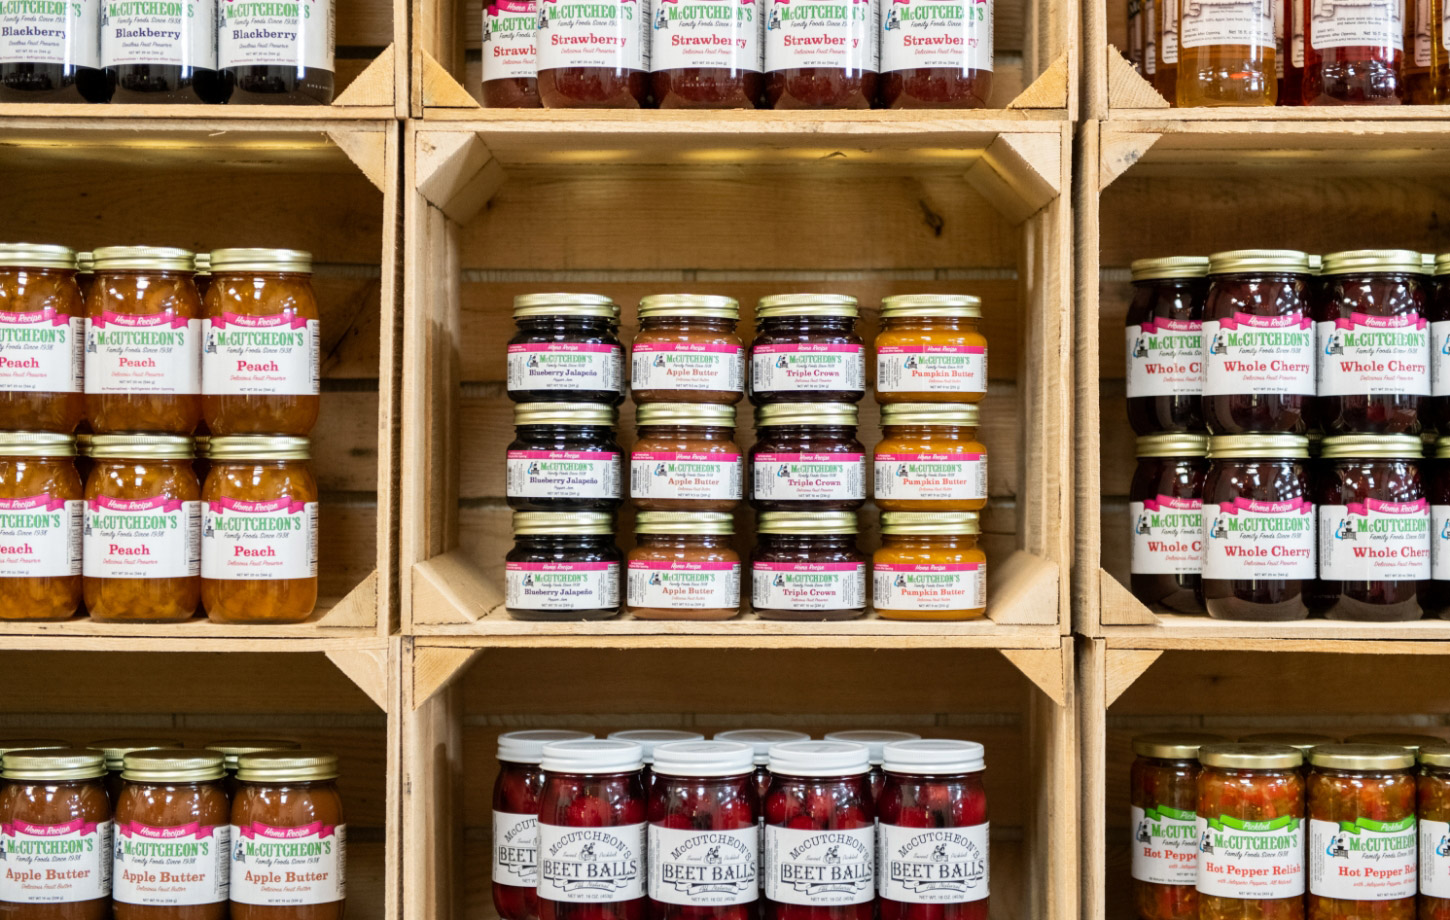 McCutcheon's starter kit jars on the shelf